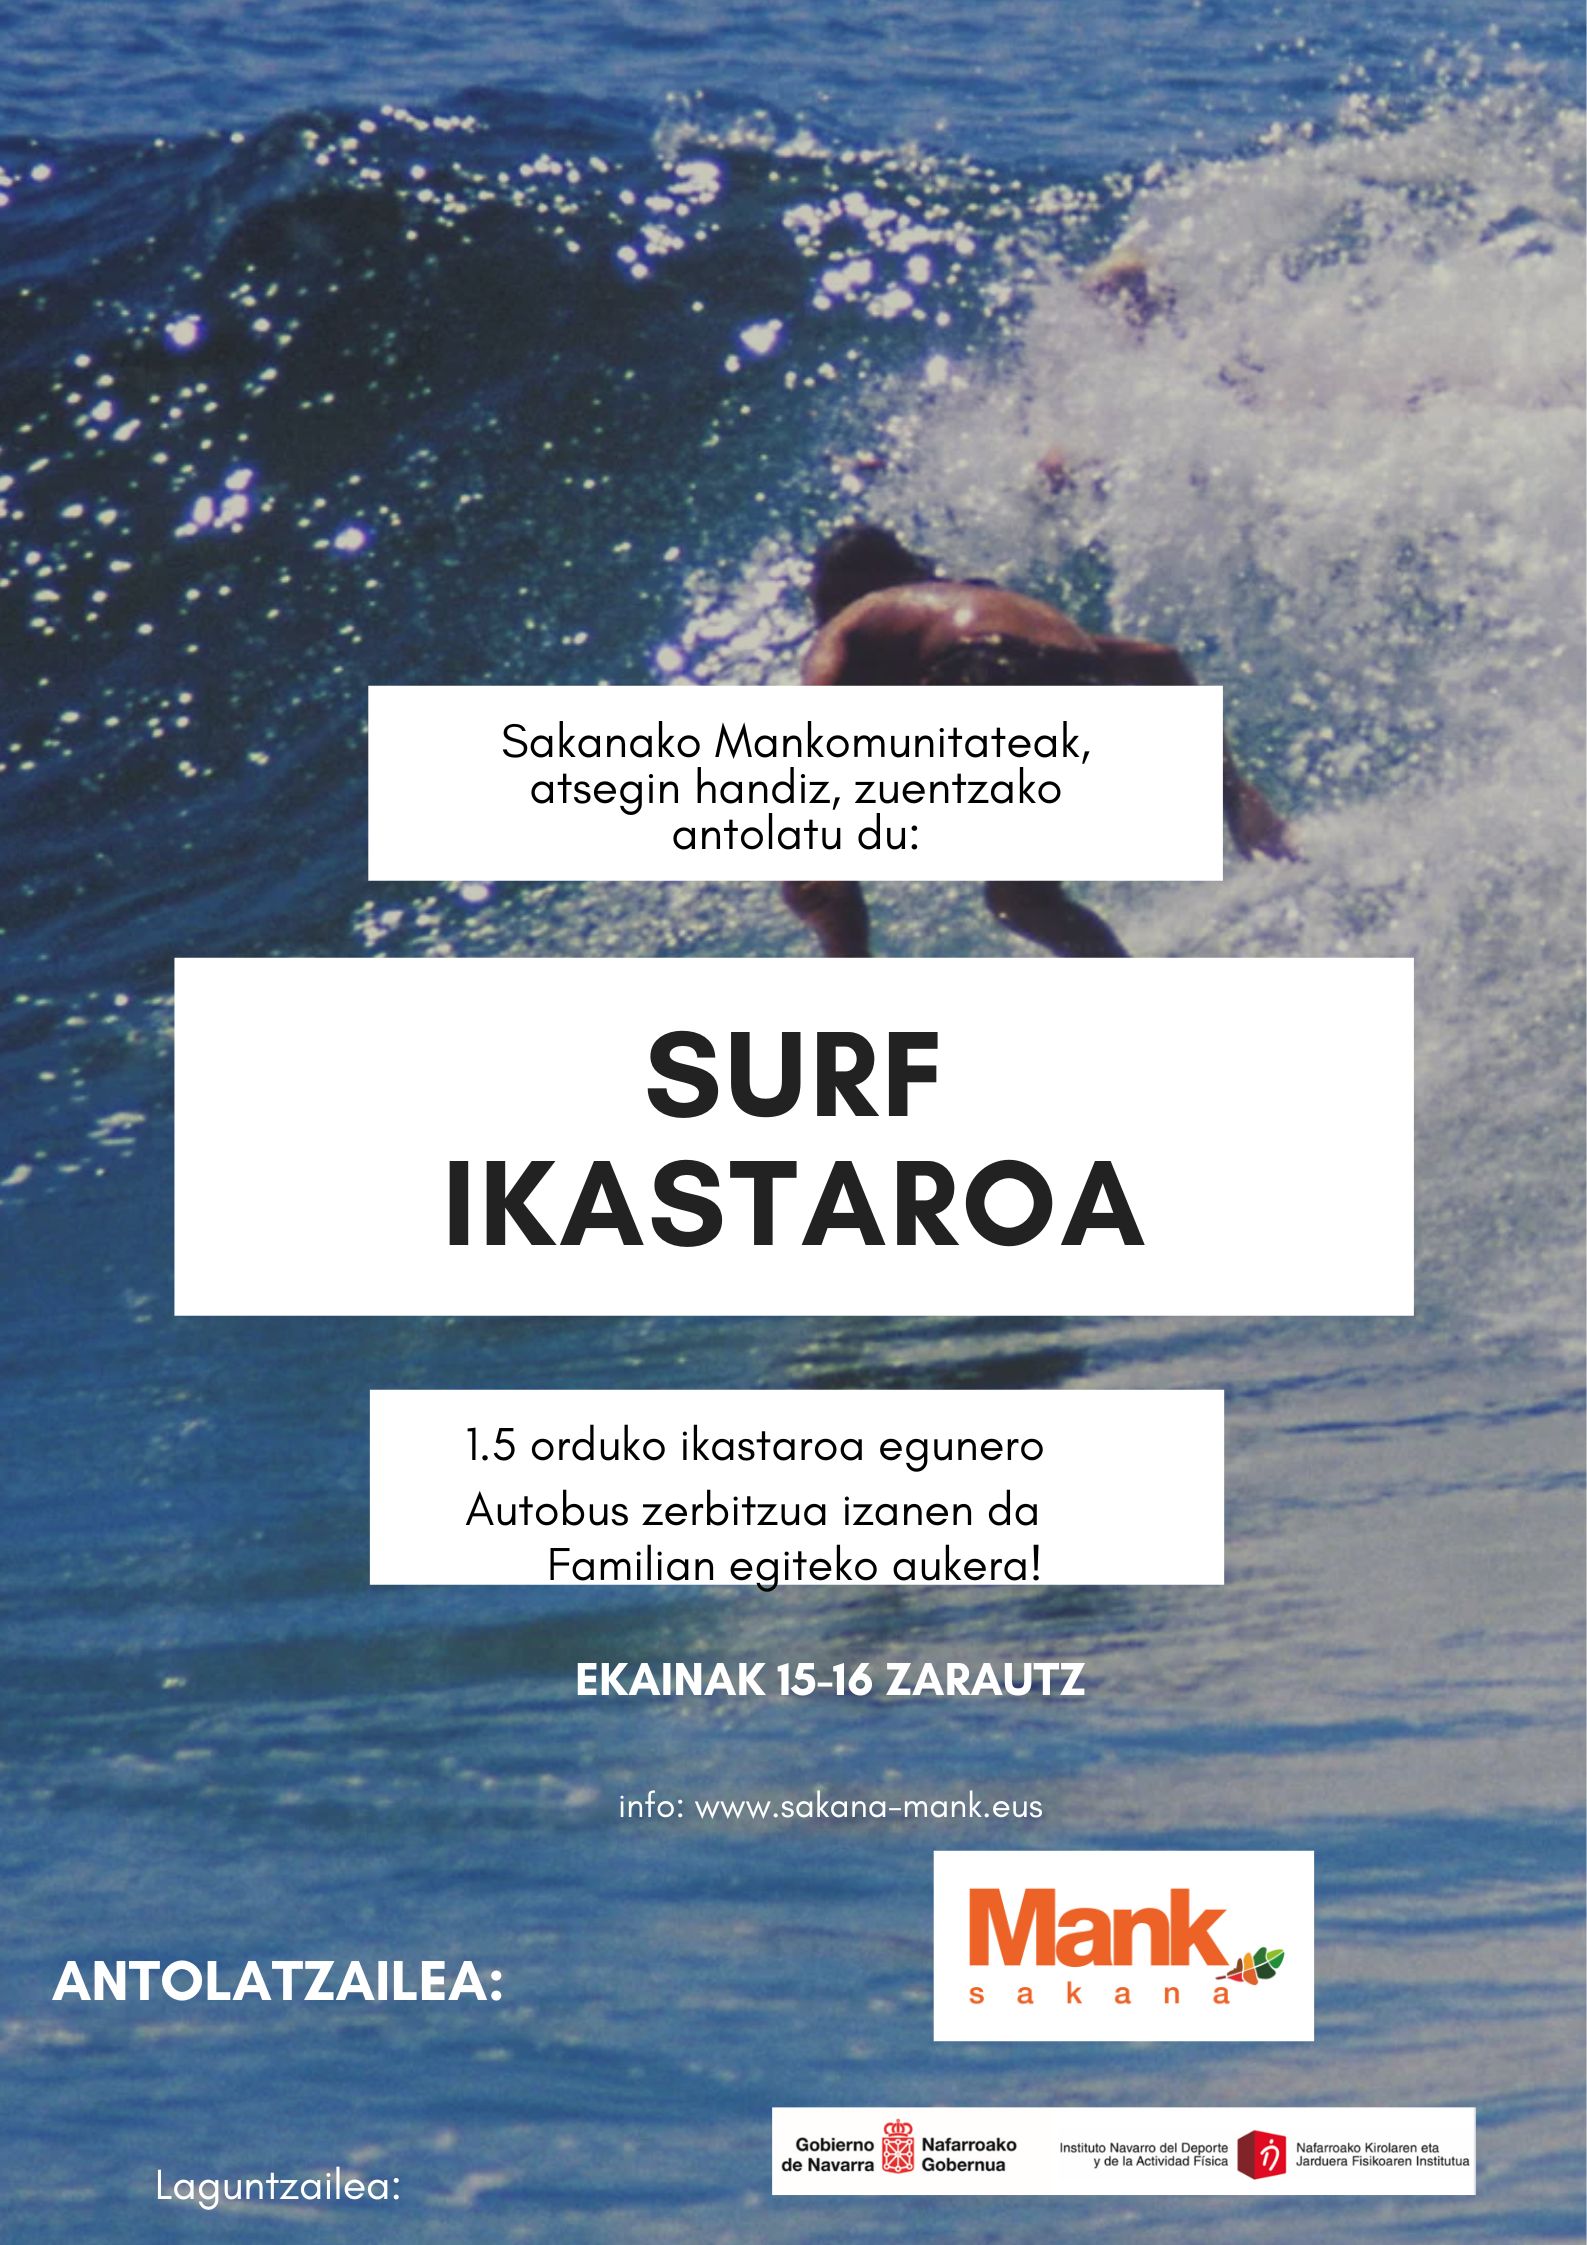 SURF IKASTAROA FAMILIAN